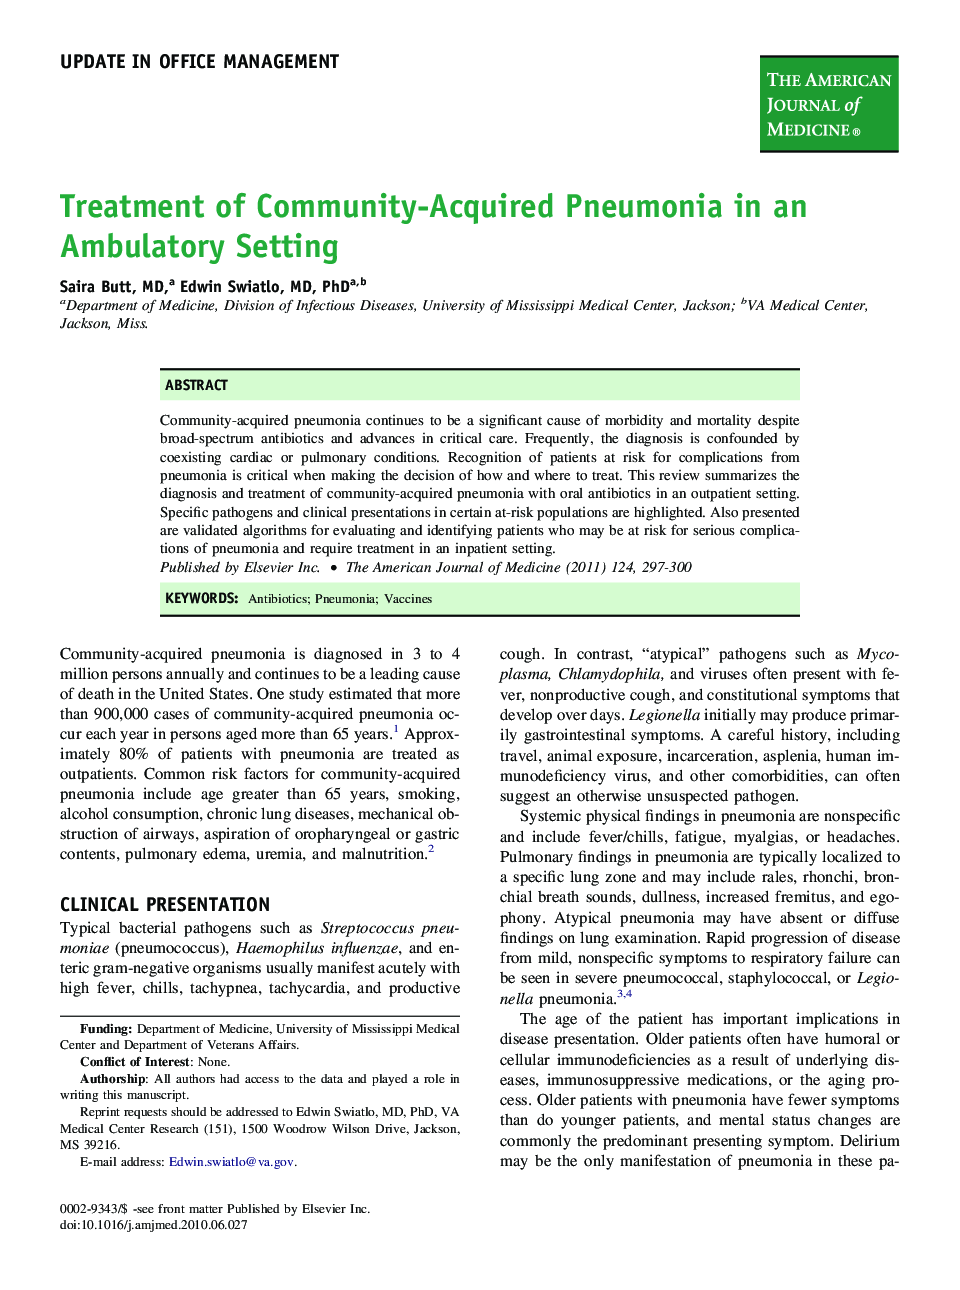 Treatment of Community-Acquired Pneumonia in an Ambulatory Setting 